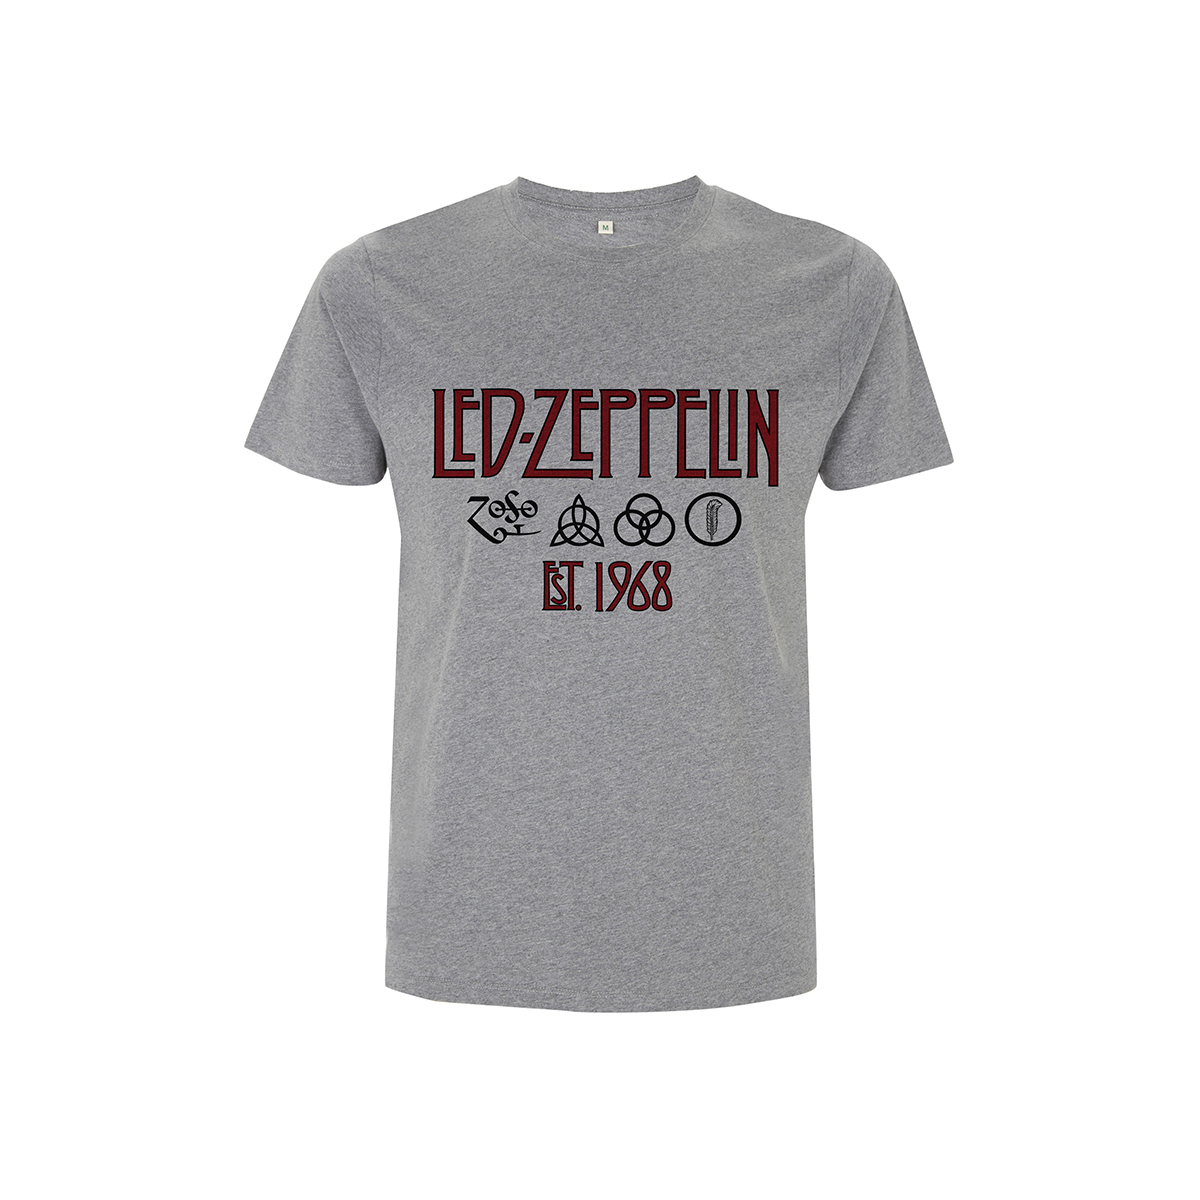 Led Zeppelin Symbols Est 68 Sports Grey T - Probity Wholesale